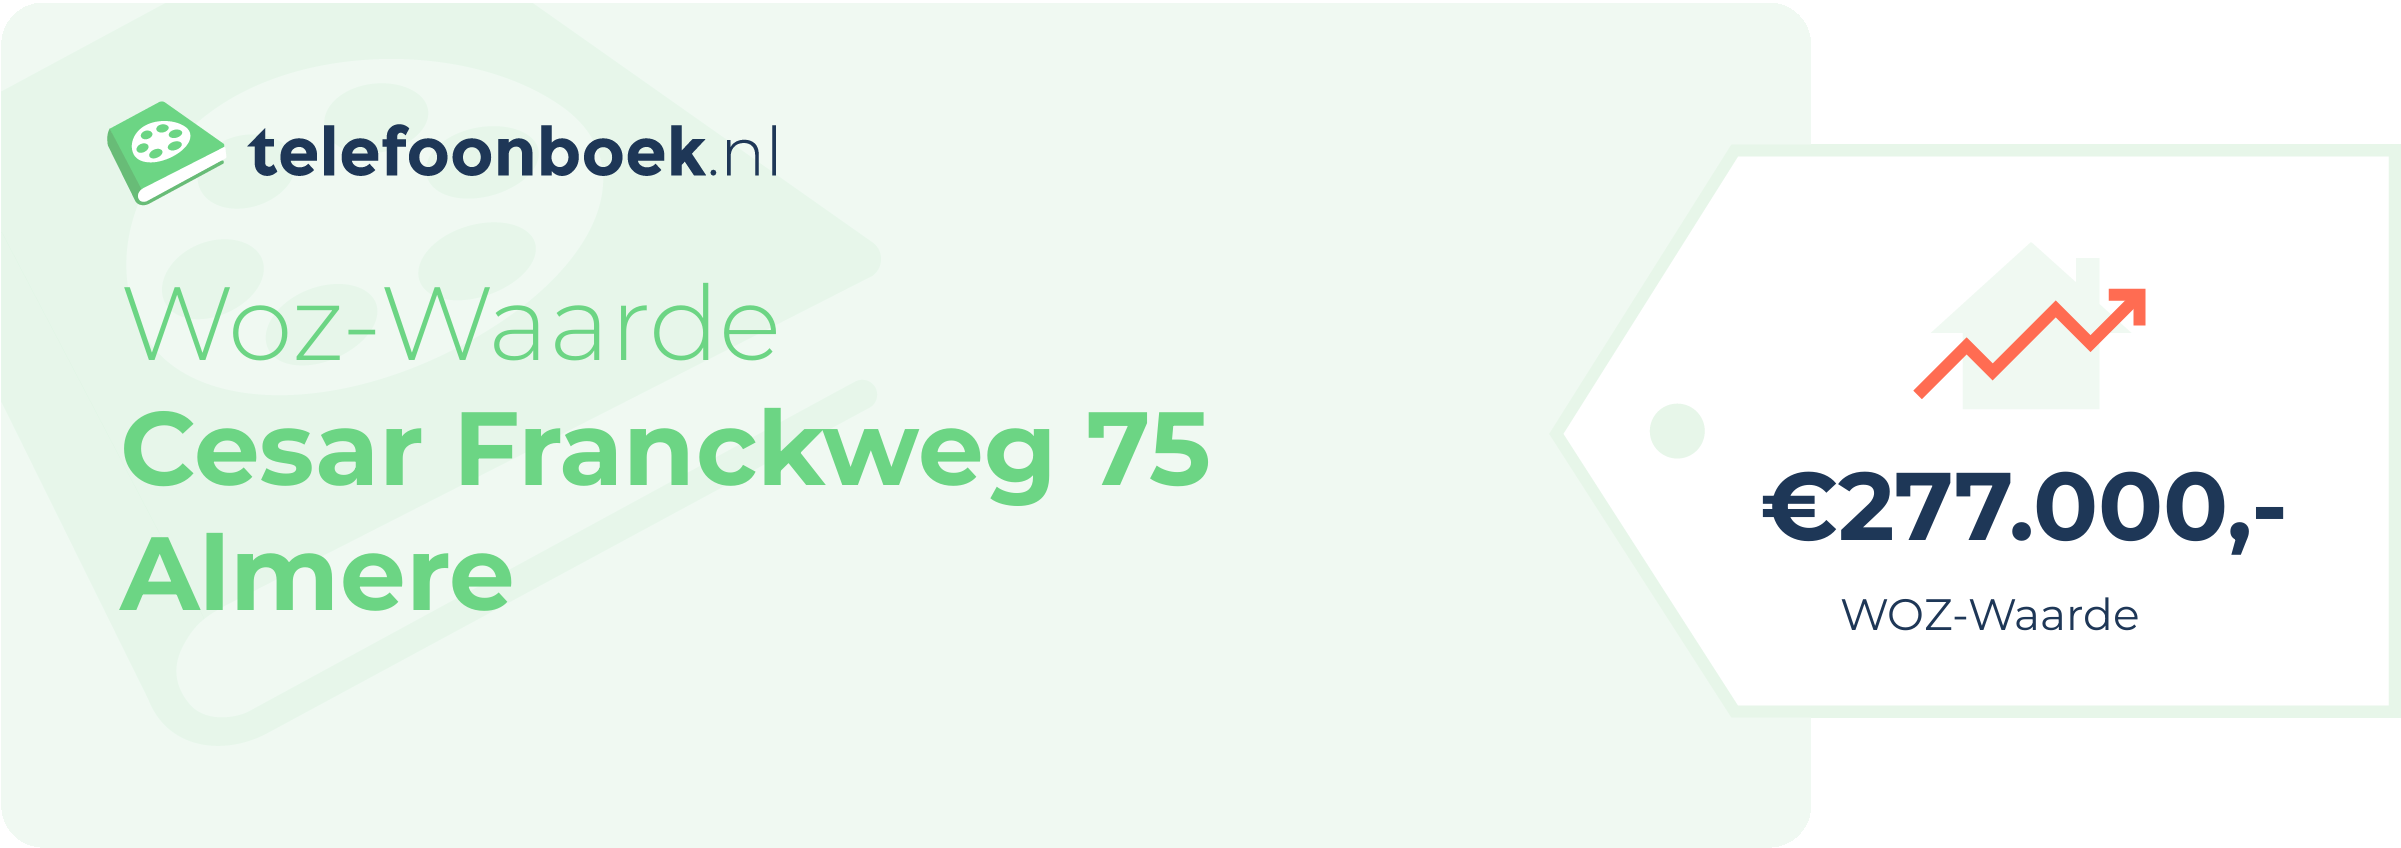 WOZ-waarde Cesar Franckweg 75 Almere